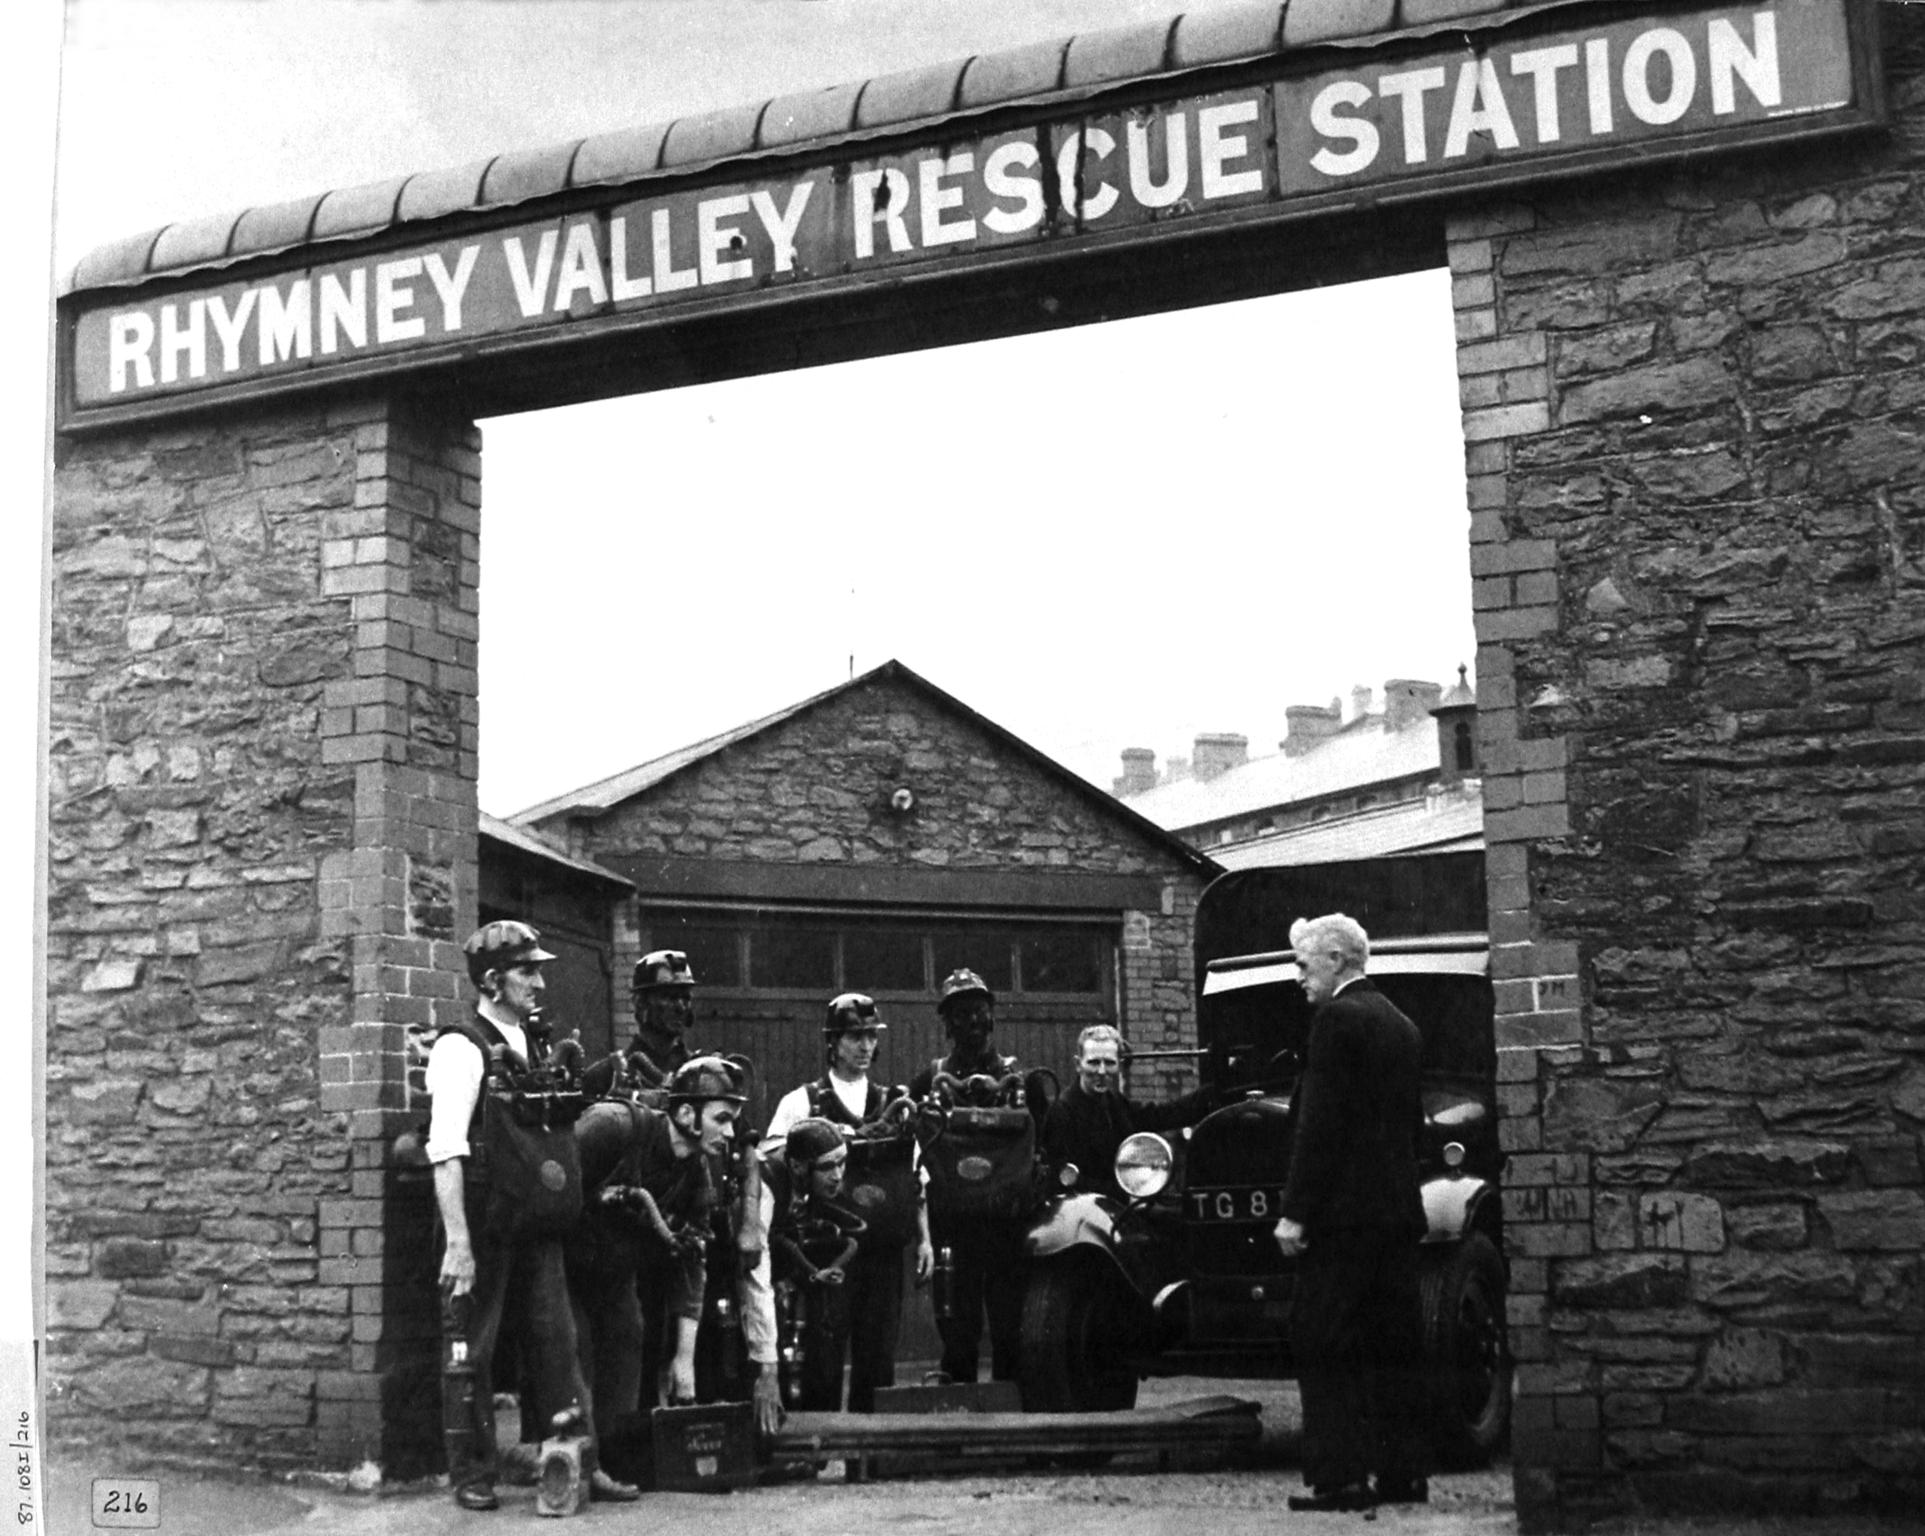 Rhymney Valley Rescue Station, photograph